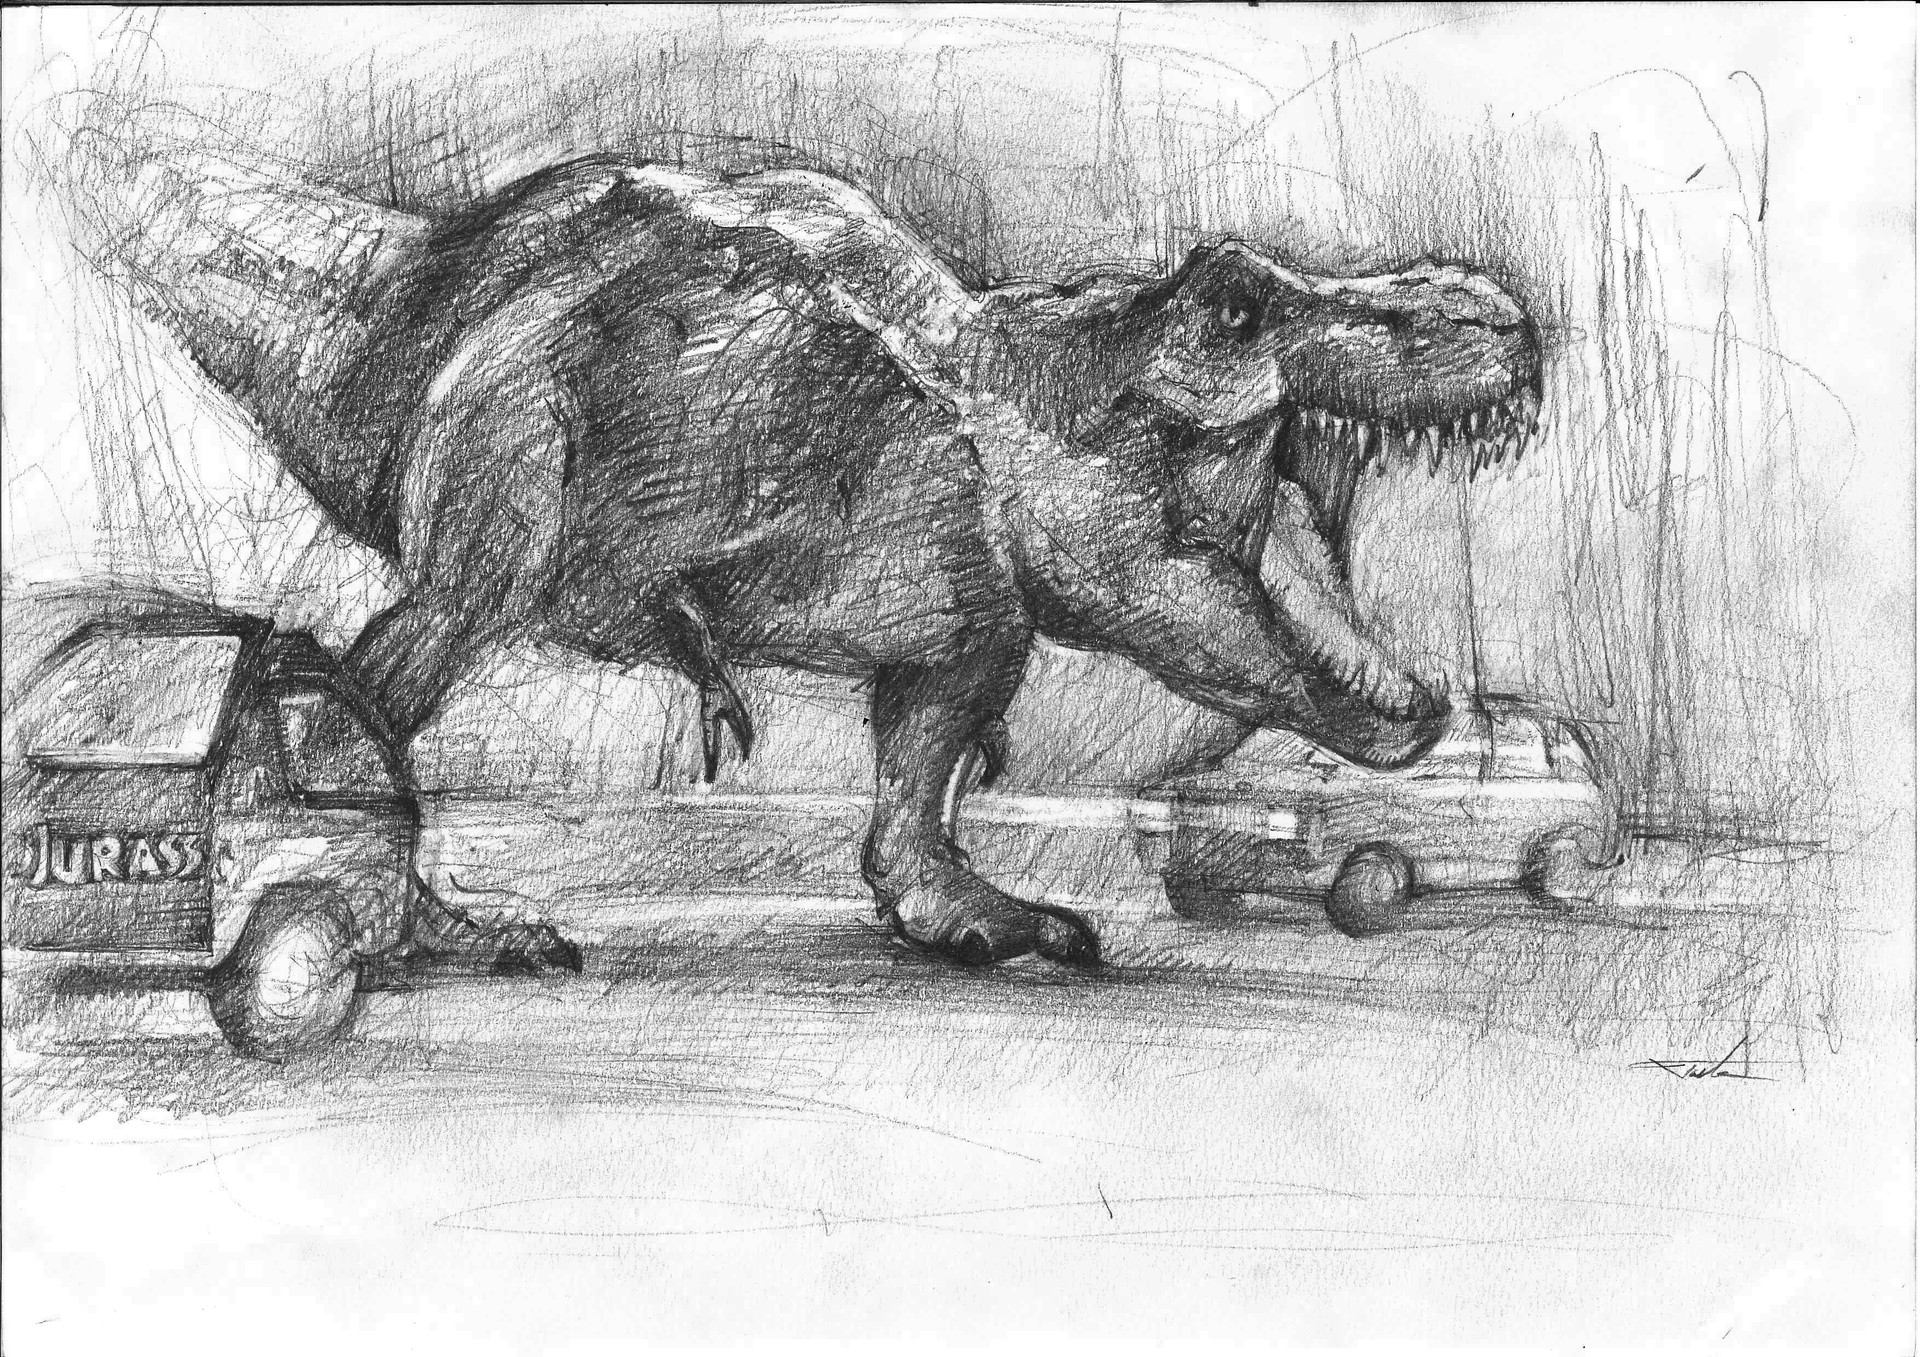 Jurassic Park Dinosaur Drawings